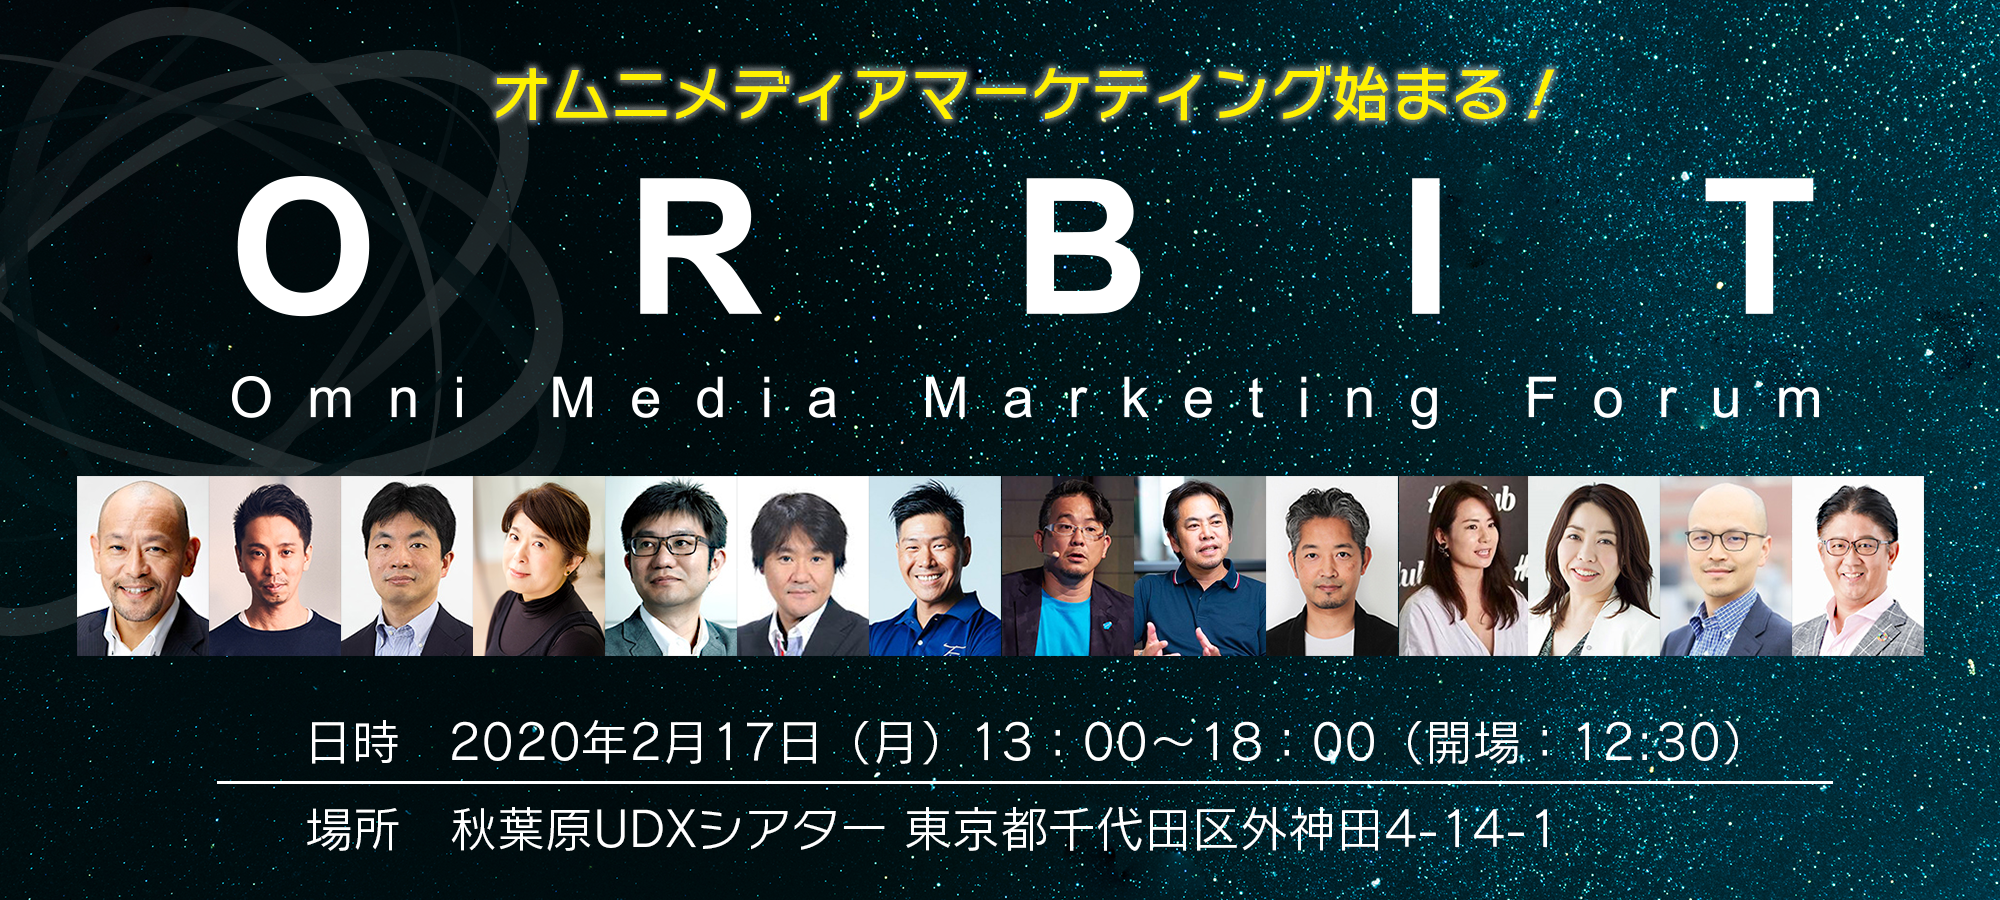 ORBIT（“Omni Media”Marketing Forum）